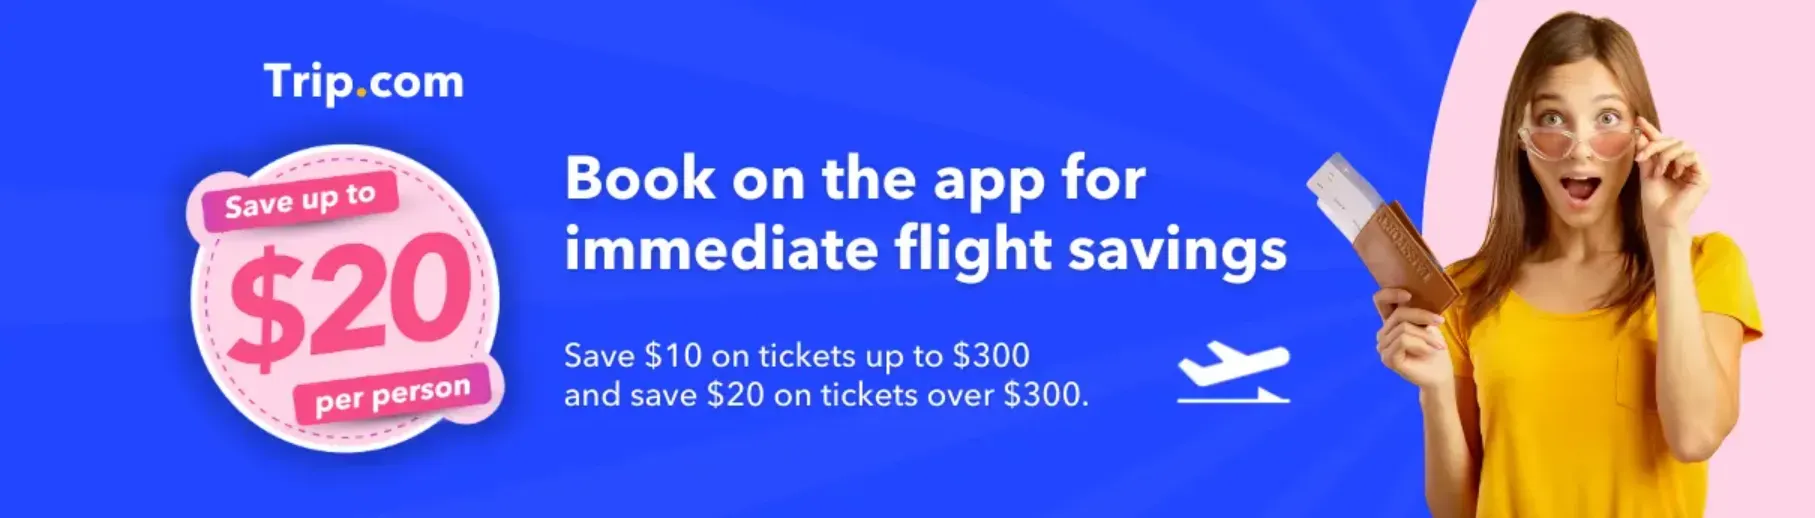 Trip.com Flight Promo Code Australia: App Booking Discount